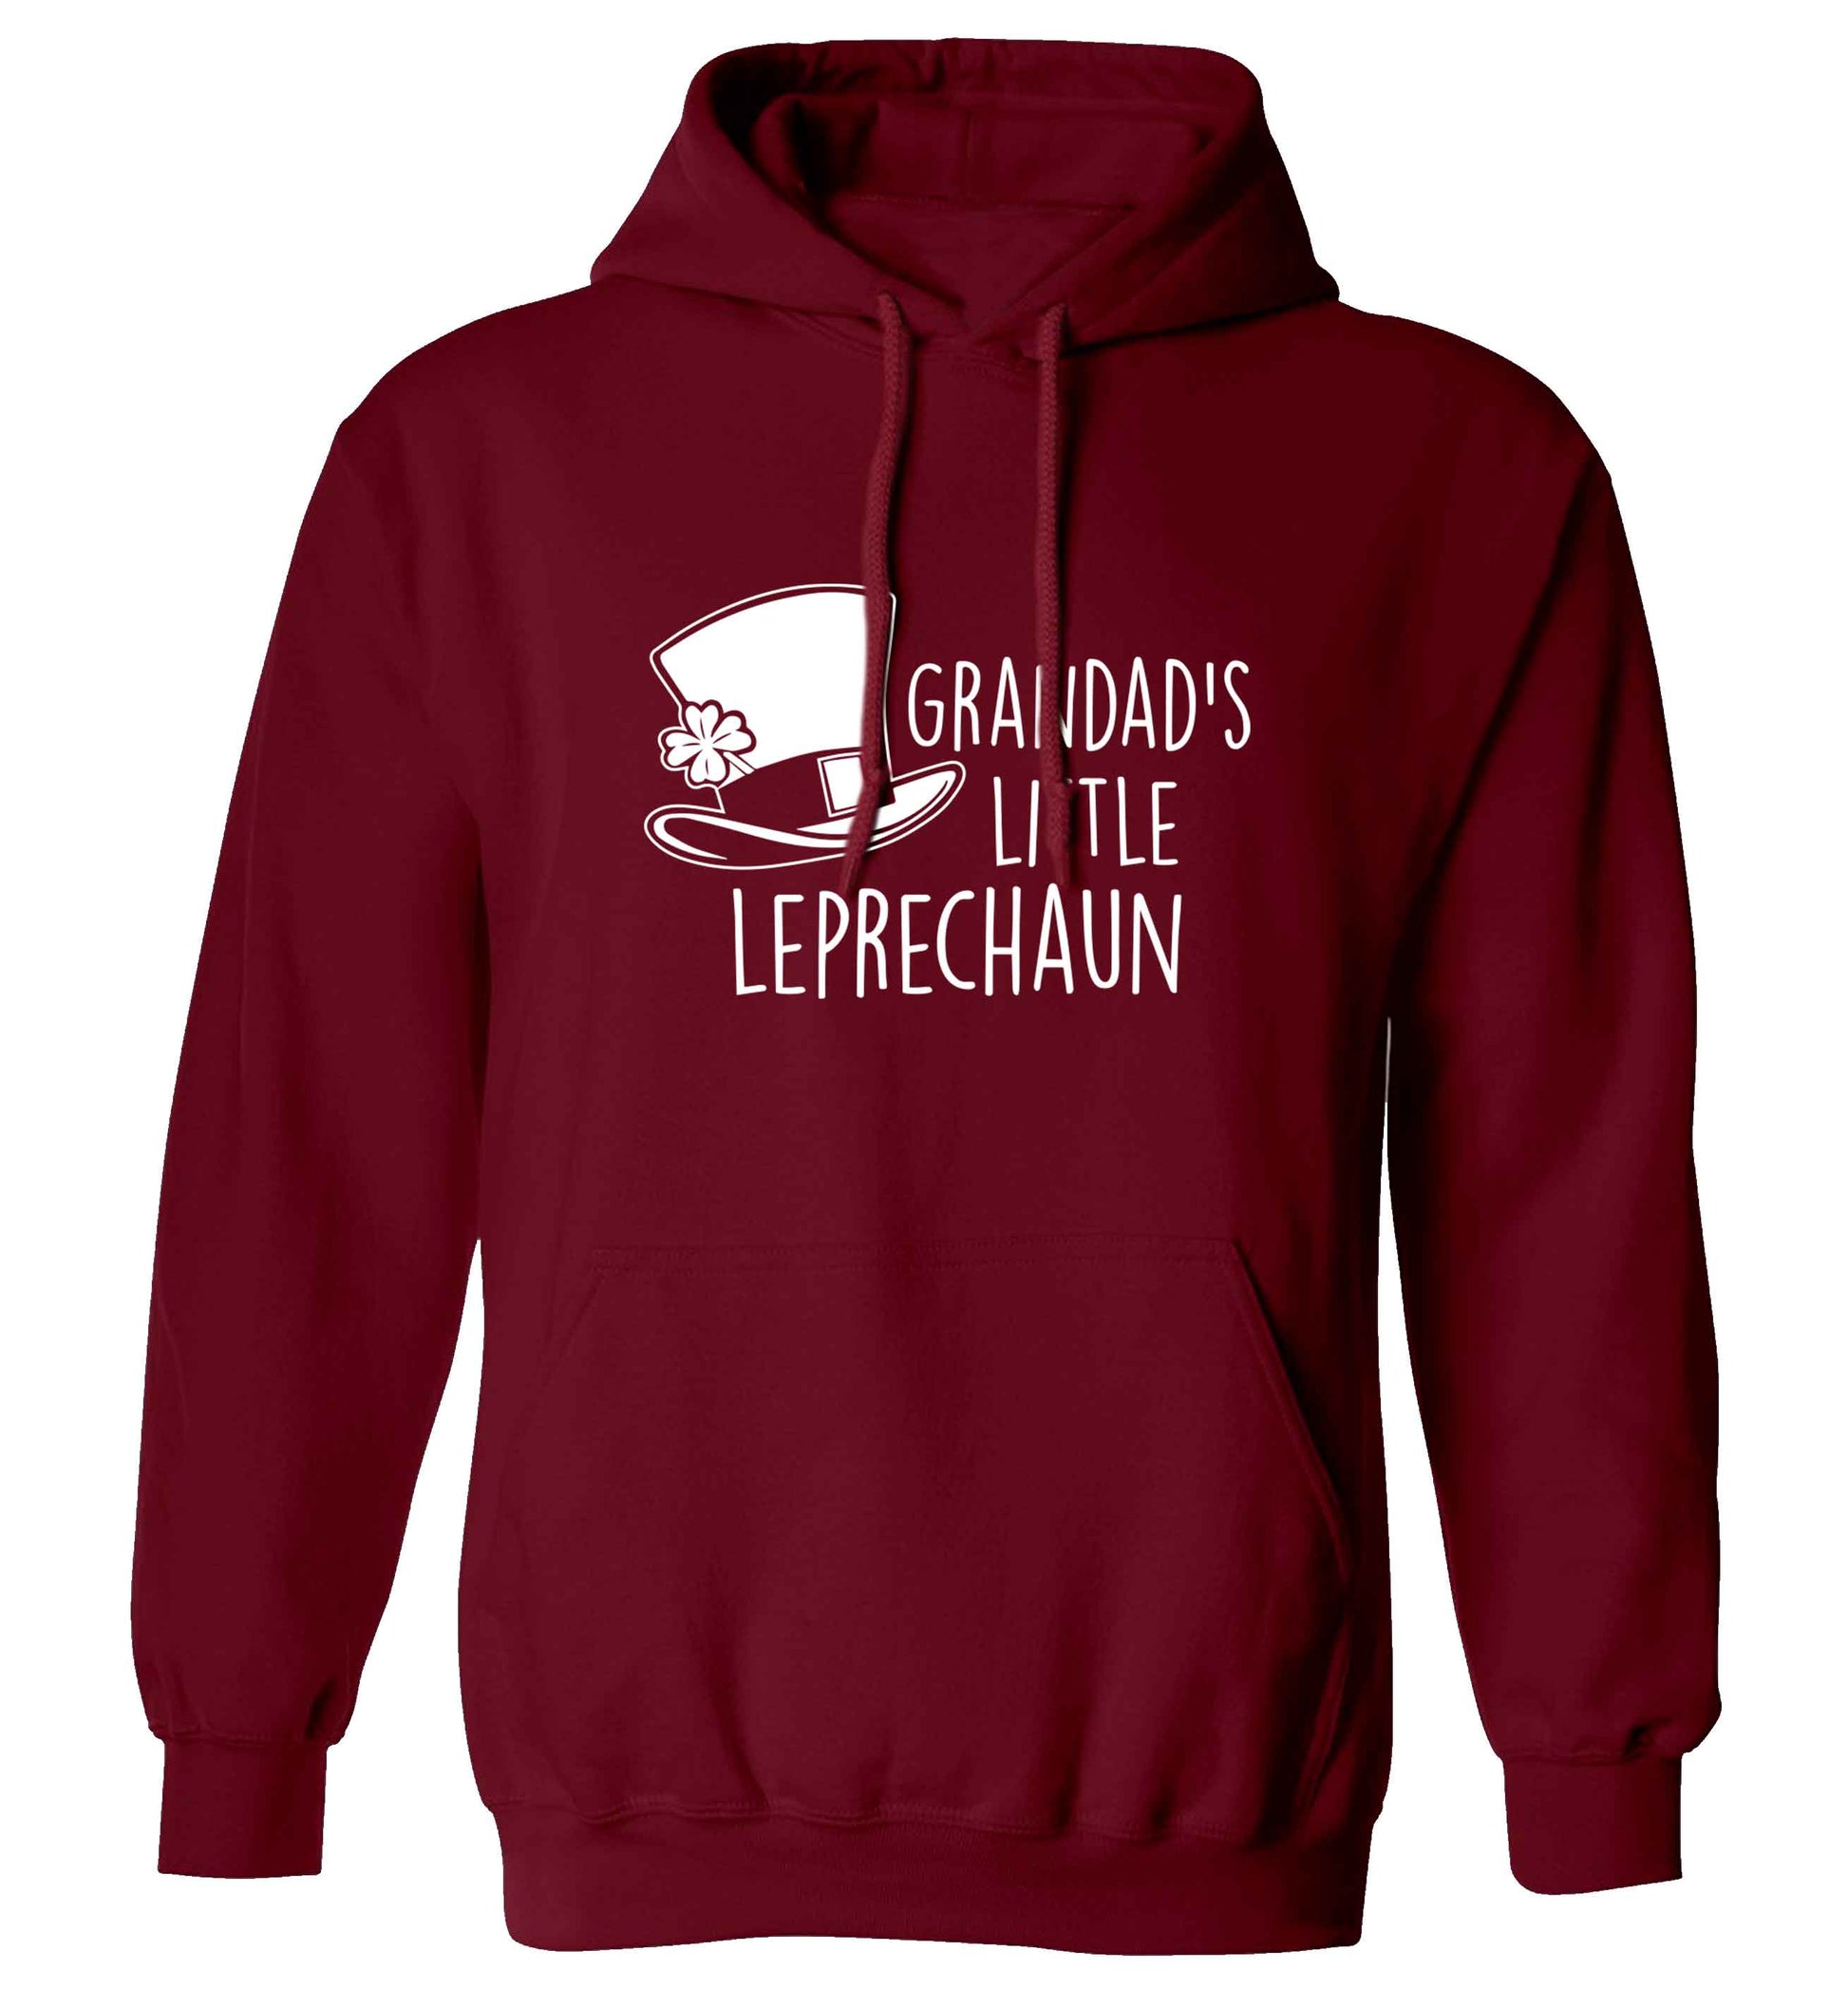 Grandad's little leprechaun adults unisex maroon hoodie 2XL